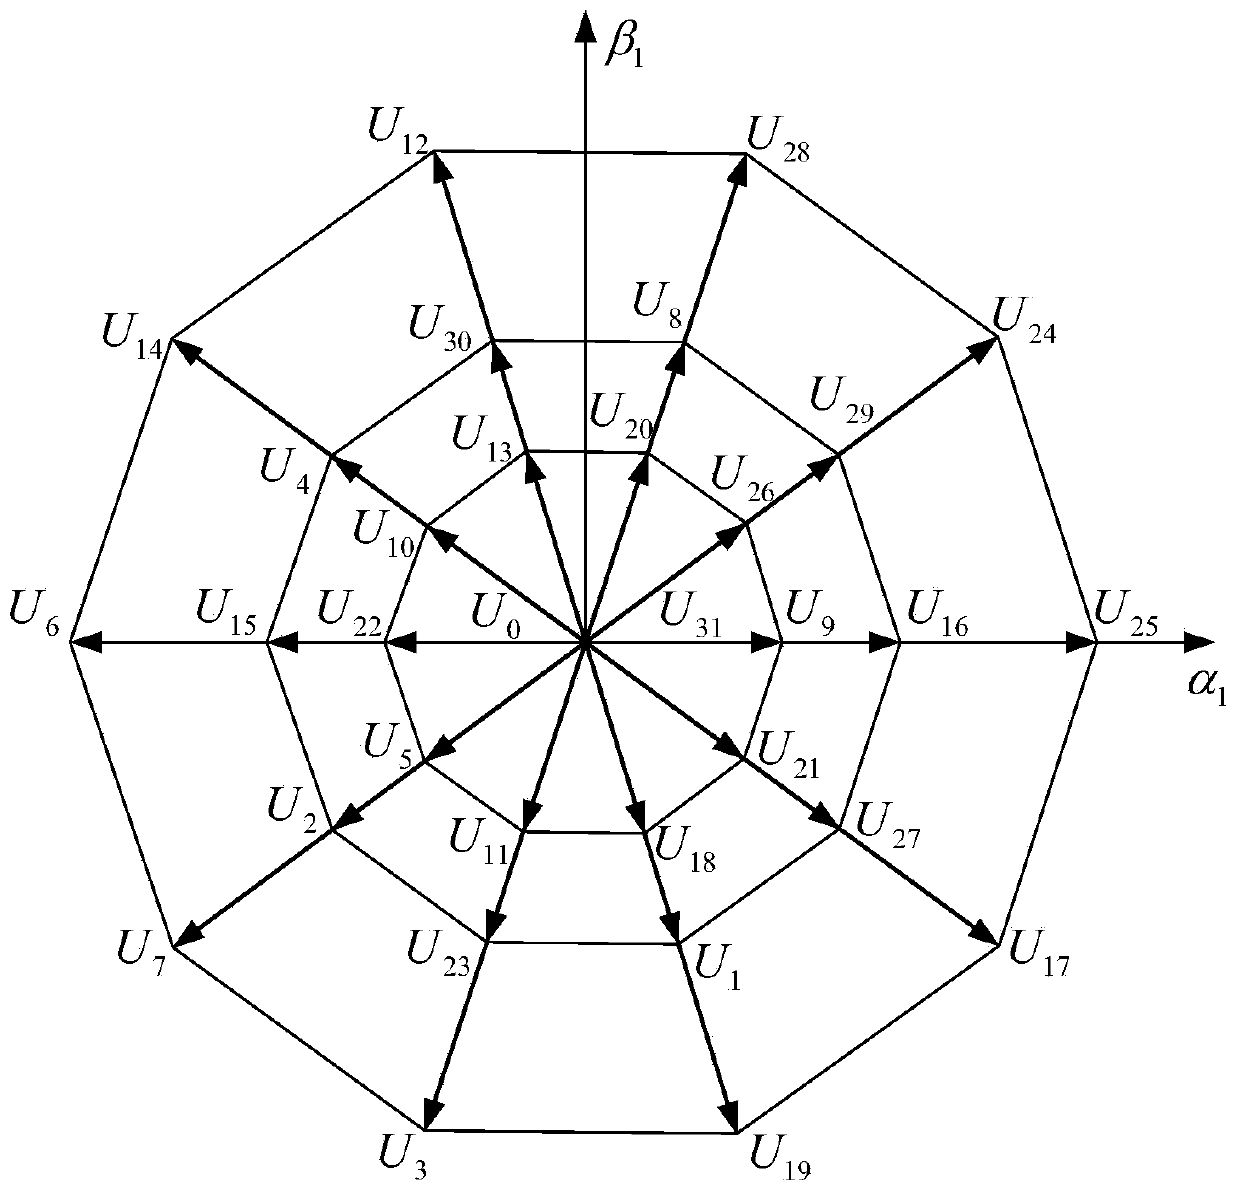 A non-sinusoidal random svpwm modulation method for five-phase inverter